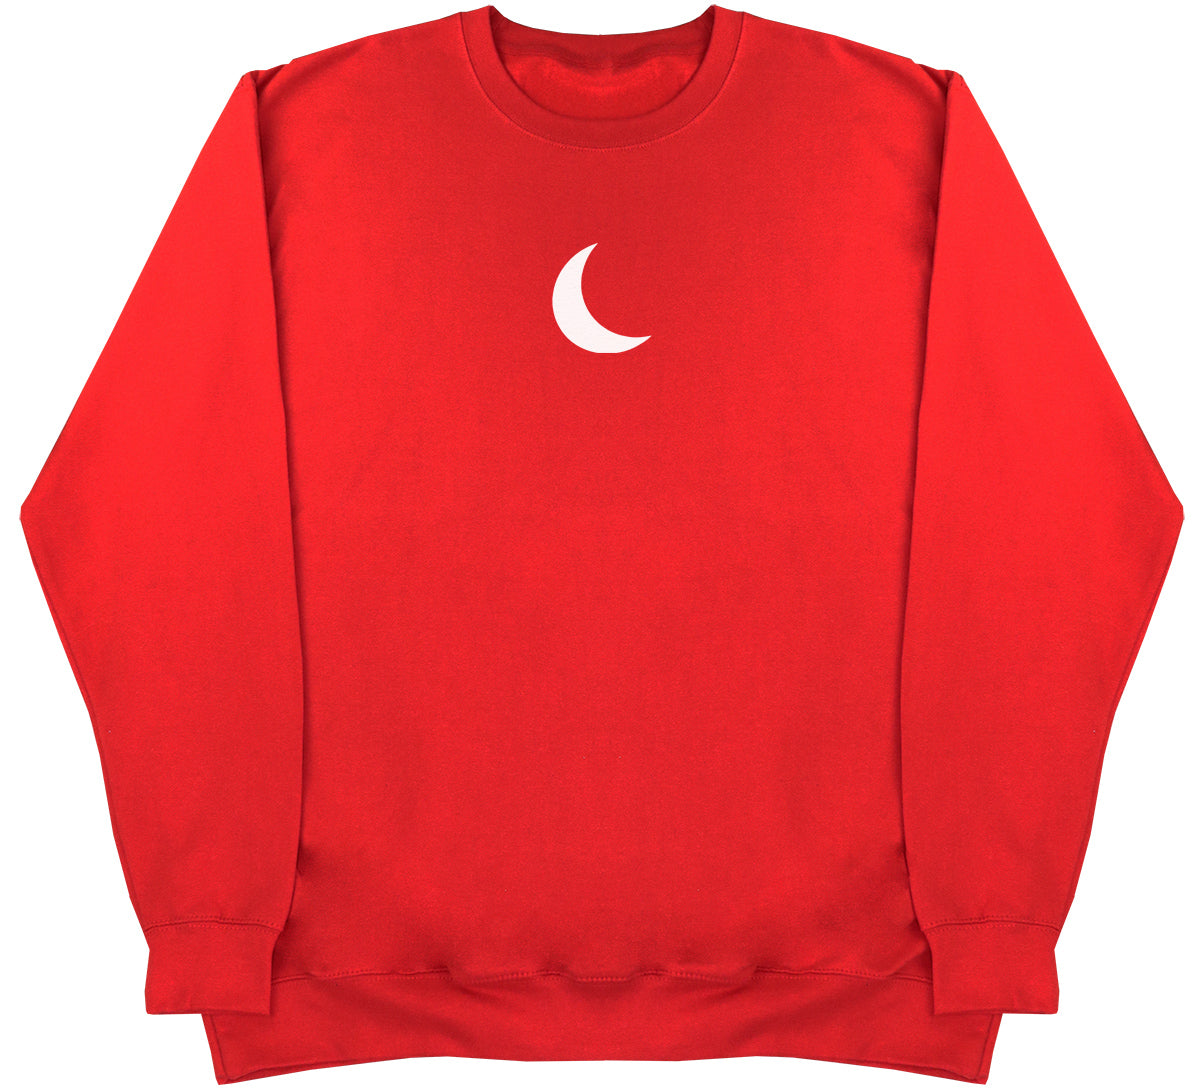 Crescent - Huge Oversized Comfy Original Sweater